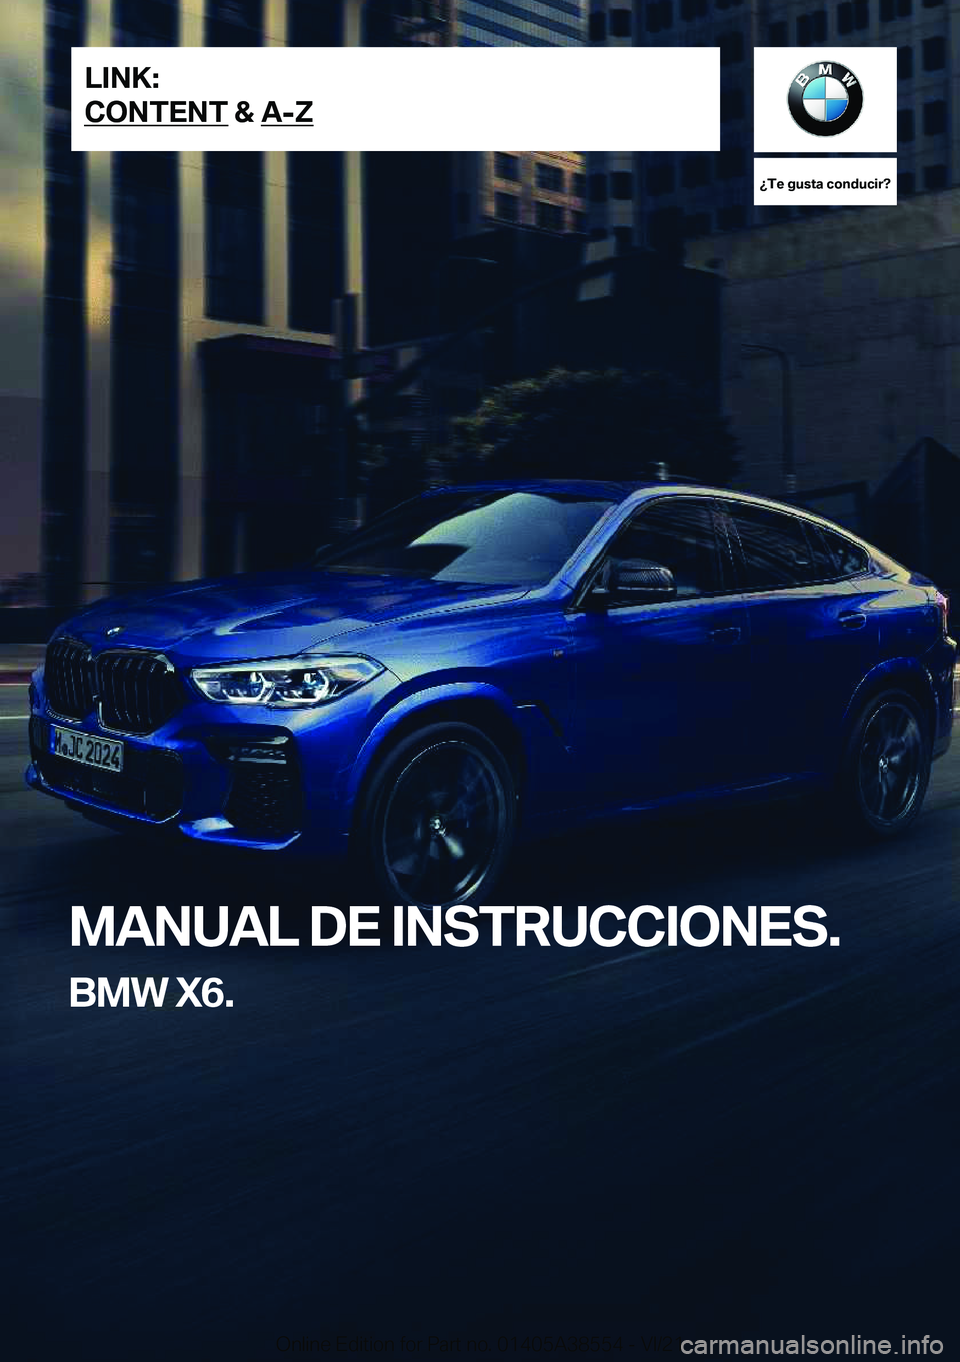 BMW X6 2022  Manuales de Empleo (in Spanish) ��T�e��g�u�s�t�a��c�o�n�d�u�c�i�r� 
�M�A�N�U�A�L��D�E��I�N�S�T�R�U�C�C�I�O�N�E�S�.
�B�M�W��X�6�.�L�I�N�K�:
�C�O�N�T�E�N�T��&��A�-�Z�O�n�l�i�n�e��E�d�i�t�i�o�n��f�o�r��P�a�r�t��n�o�.��0�1�